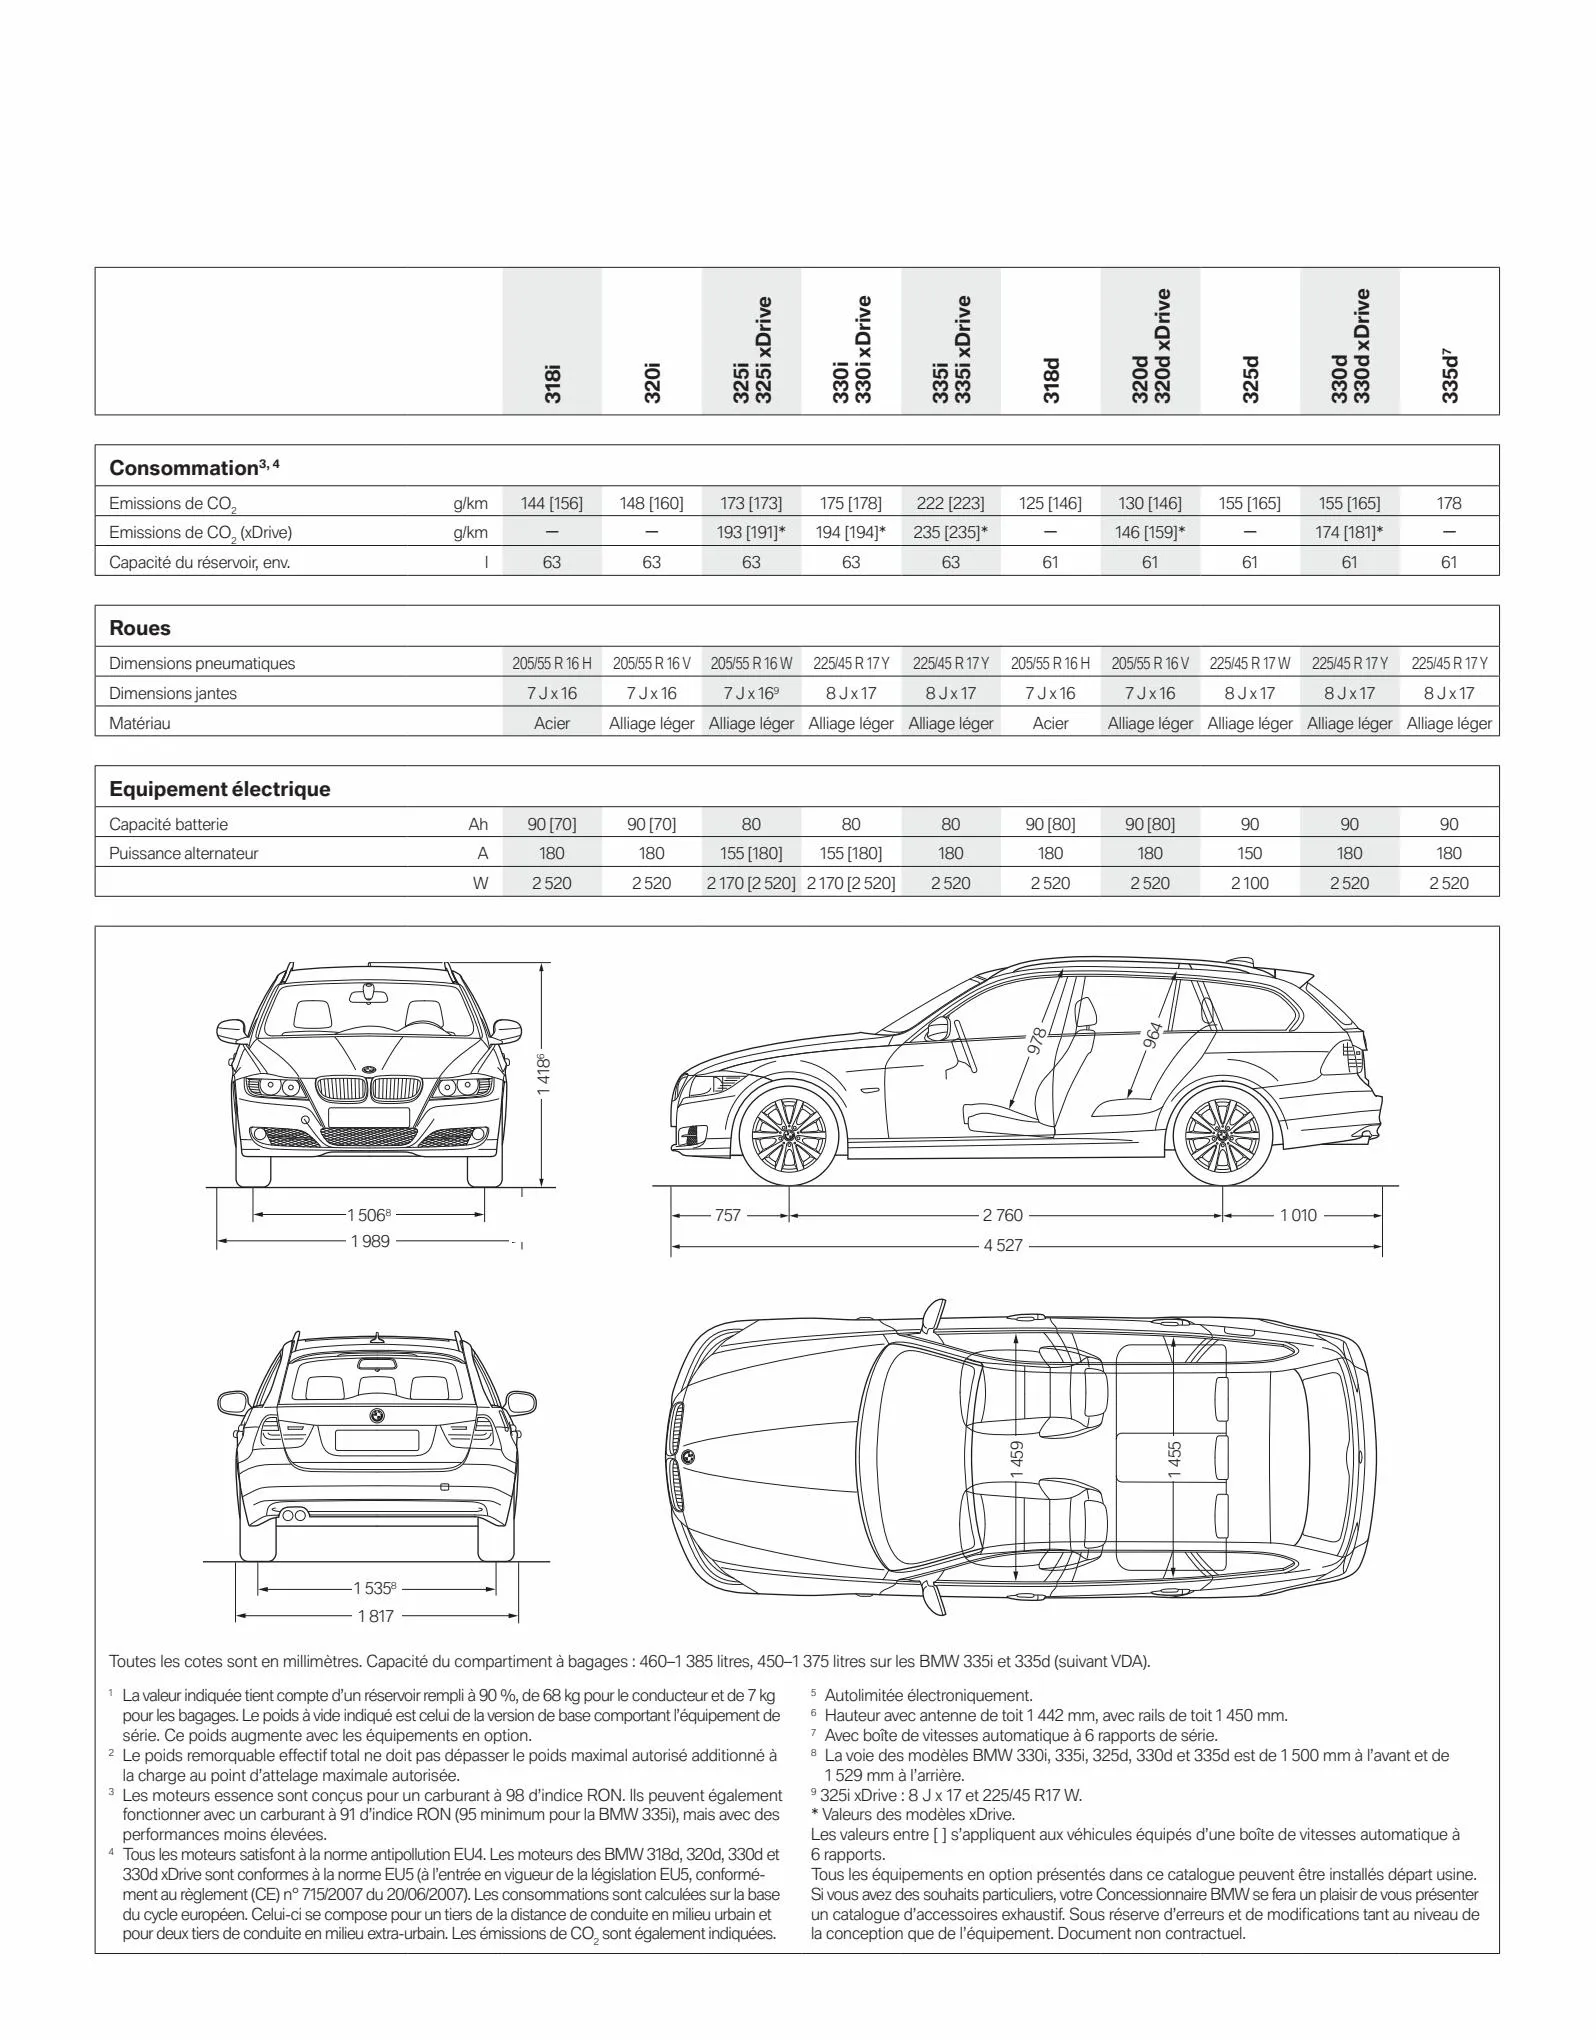 Catalogue BMW Série 3 Touring, page 00027